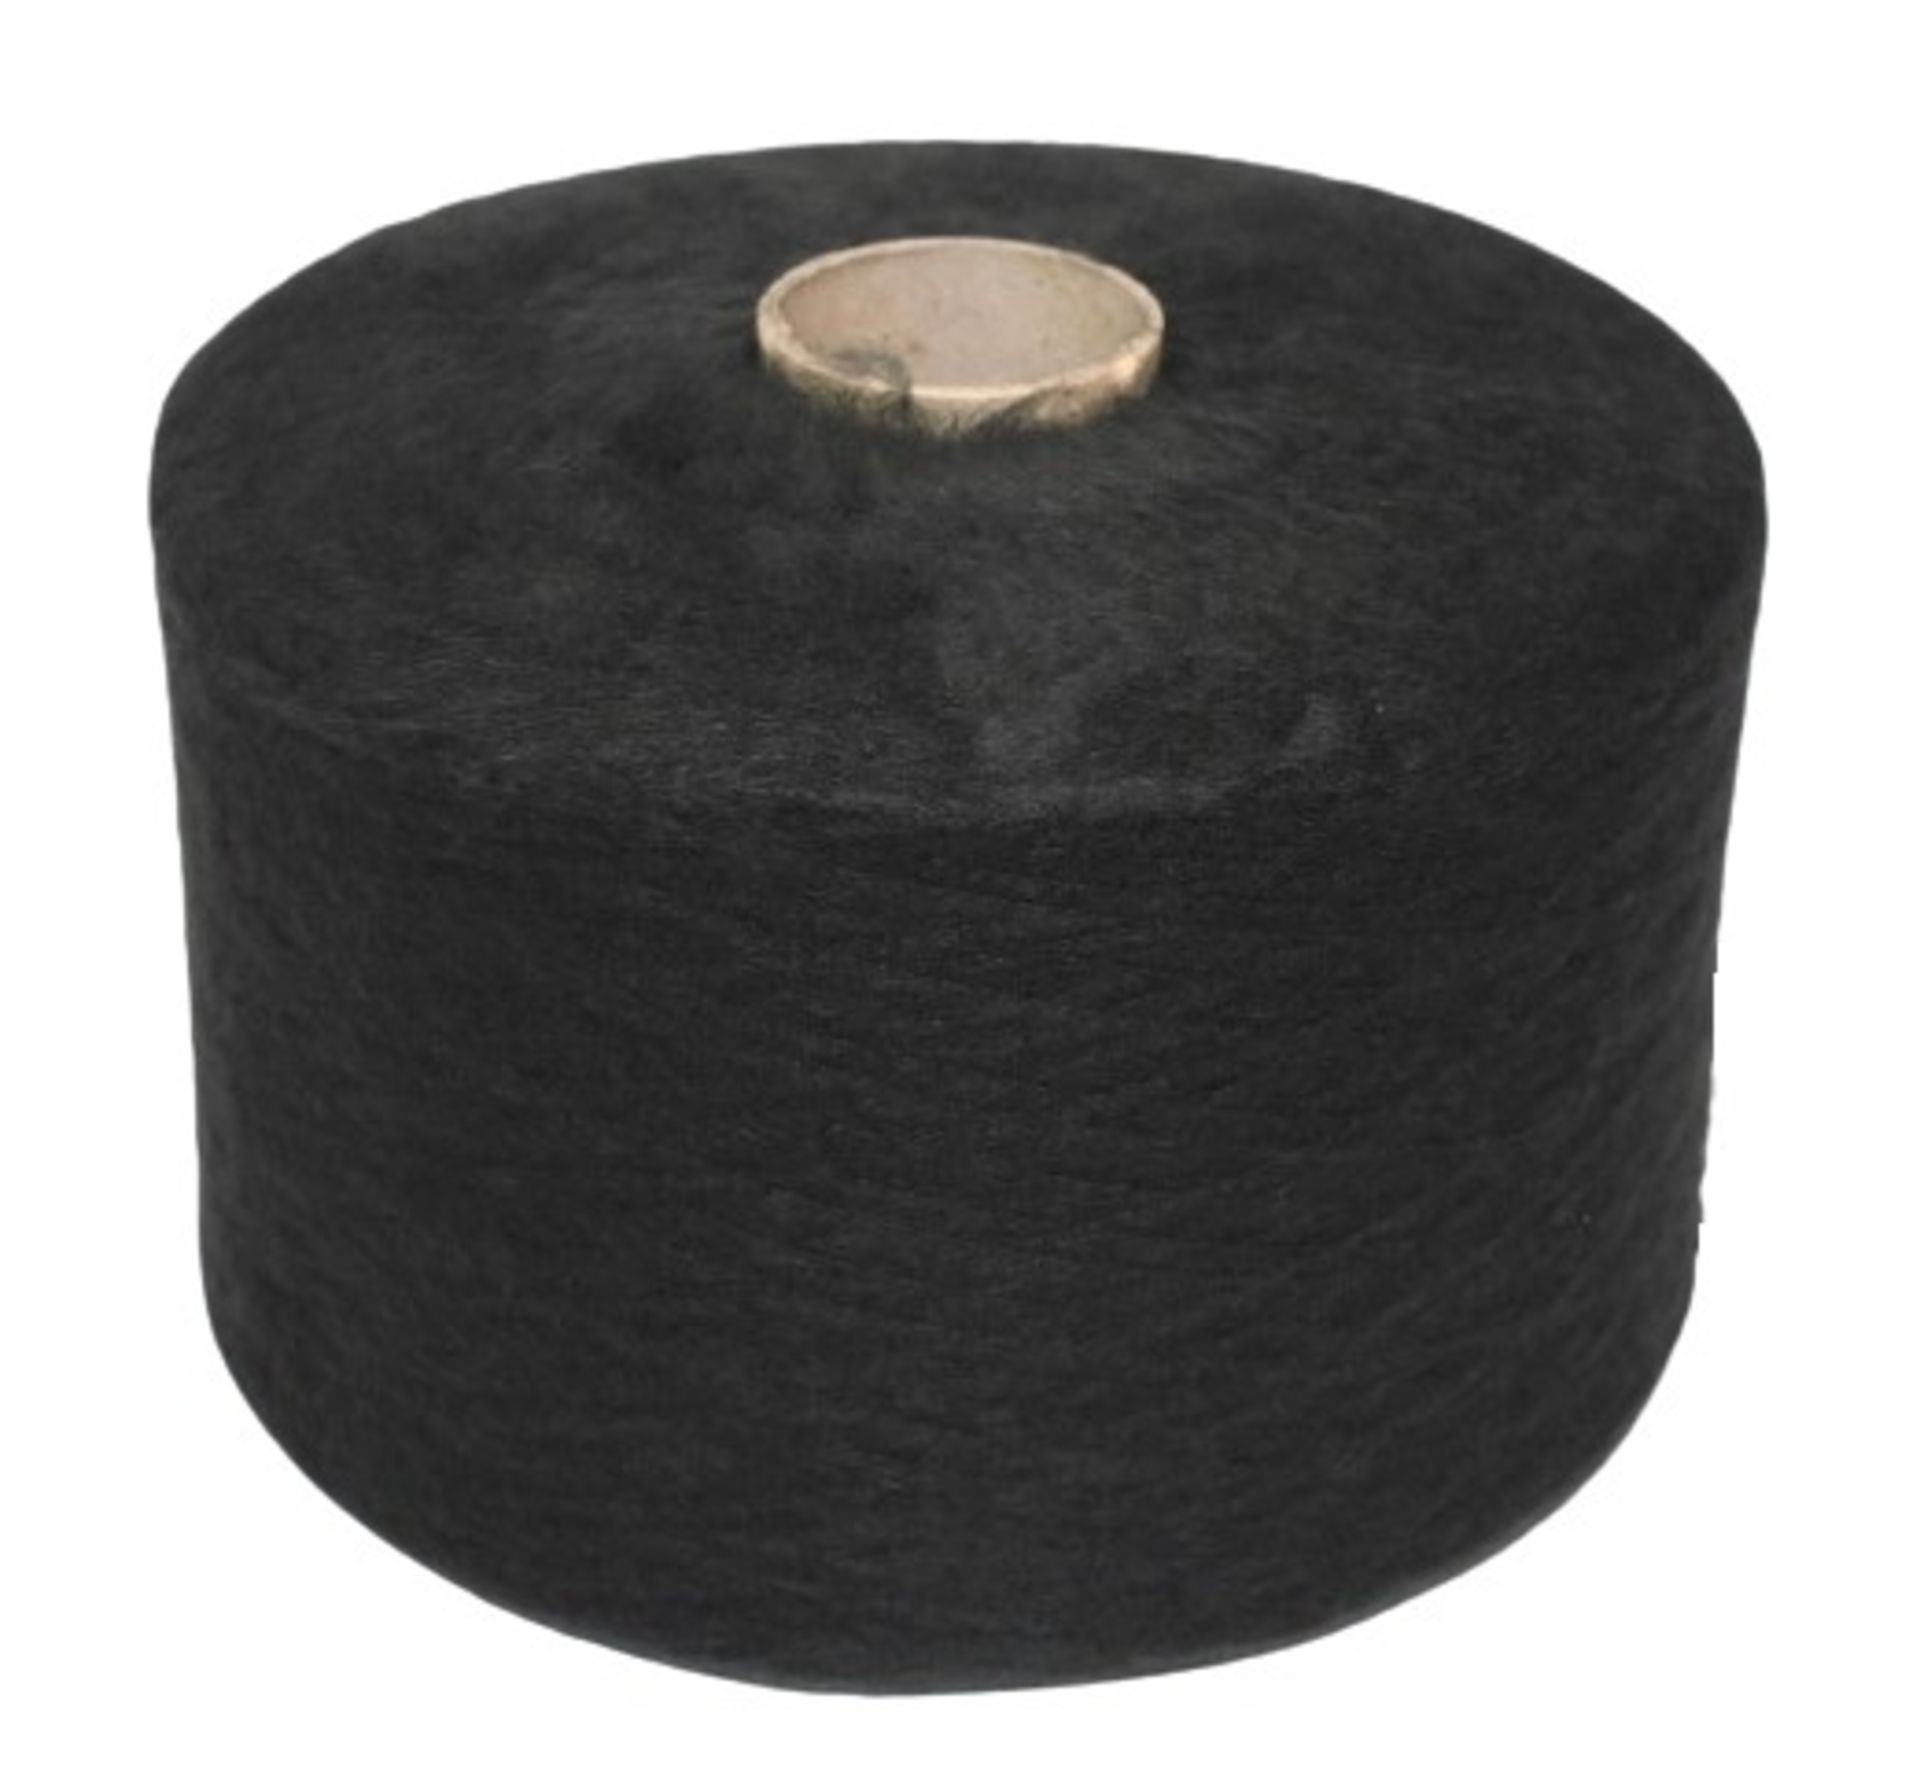 6 x Cones of 1/7,5 Lagona Knitting Yarn - Charcoal - Approx Weight: 2,300g - New Stock ABL Yarn